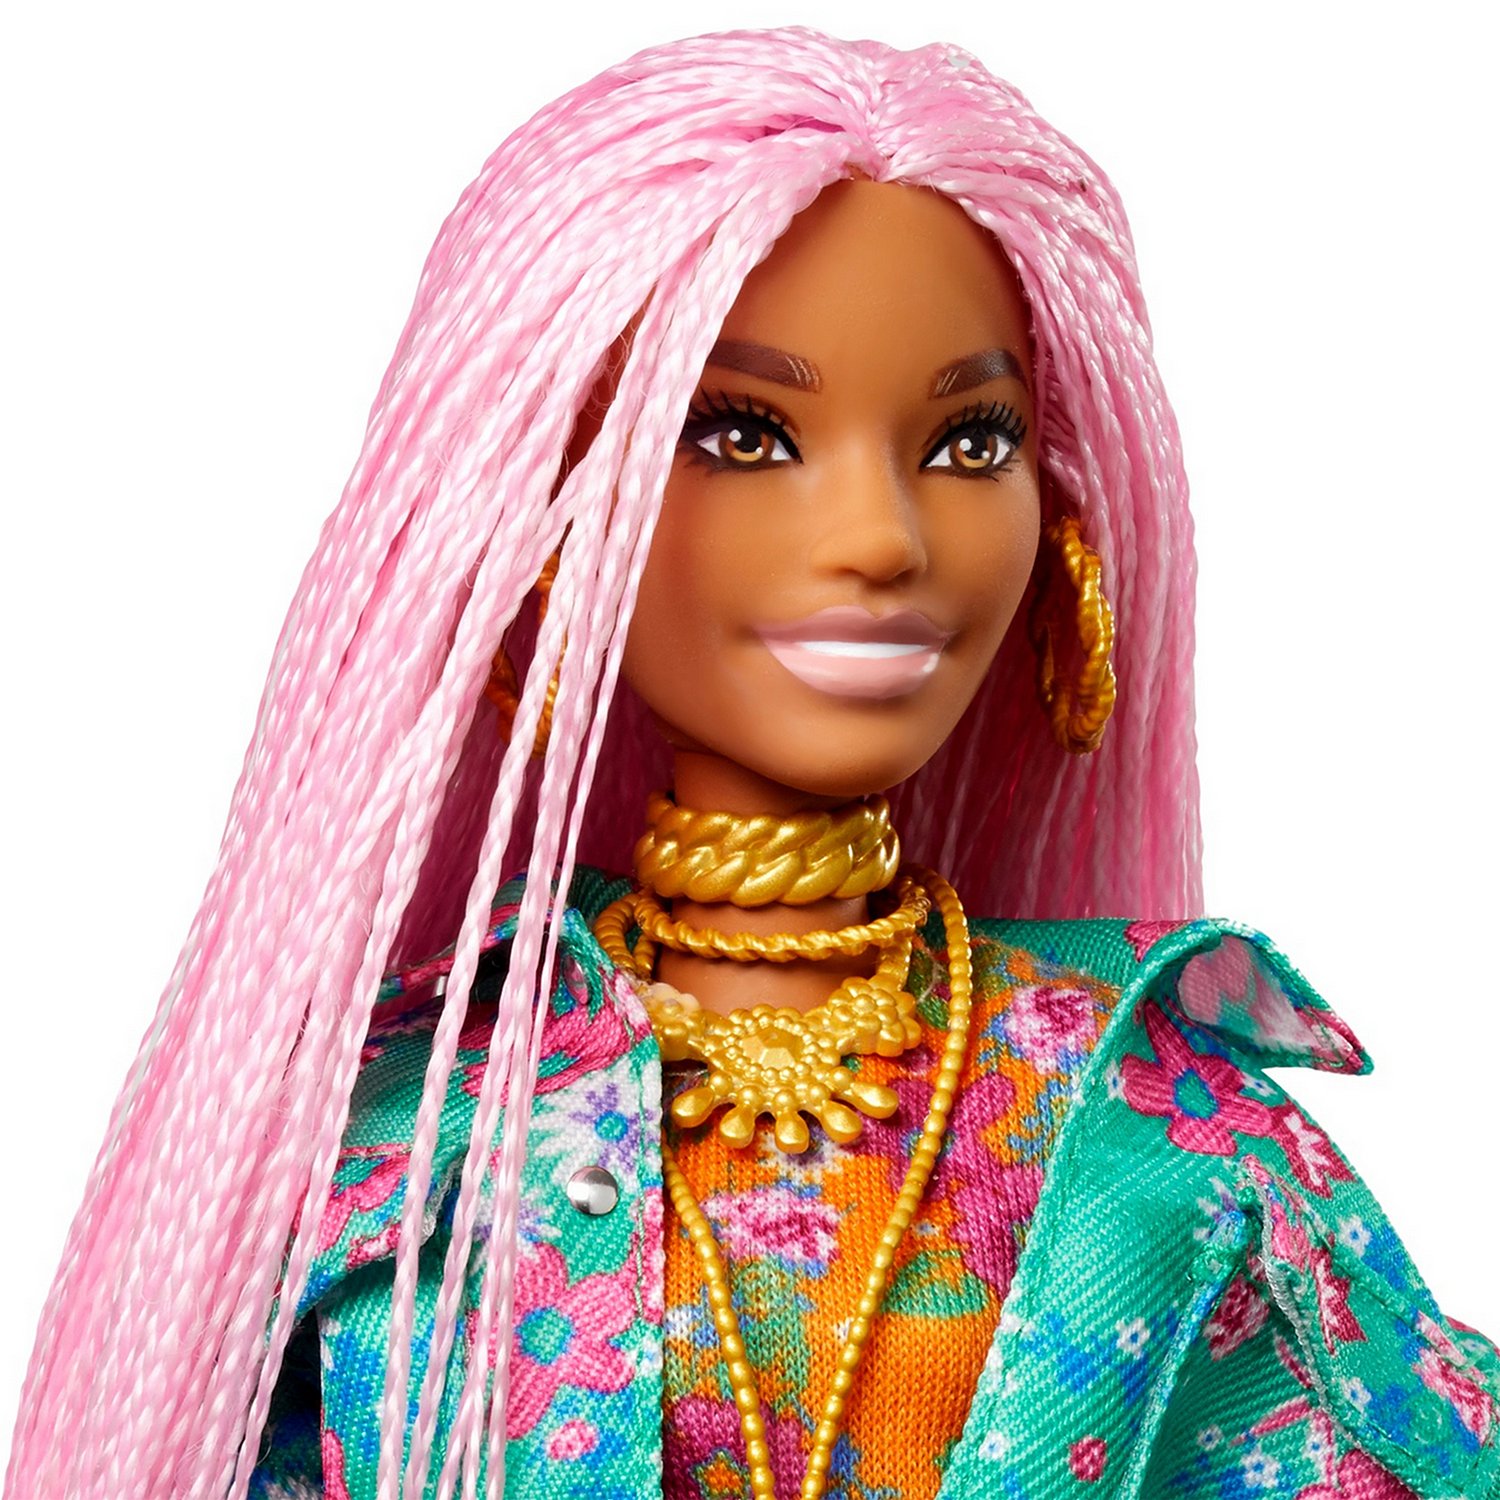 Кукла Barbie GXF09 Экстра с розовыми косичками